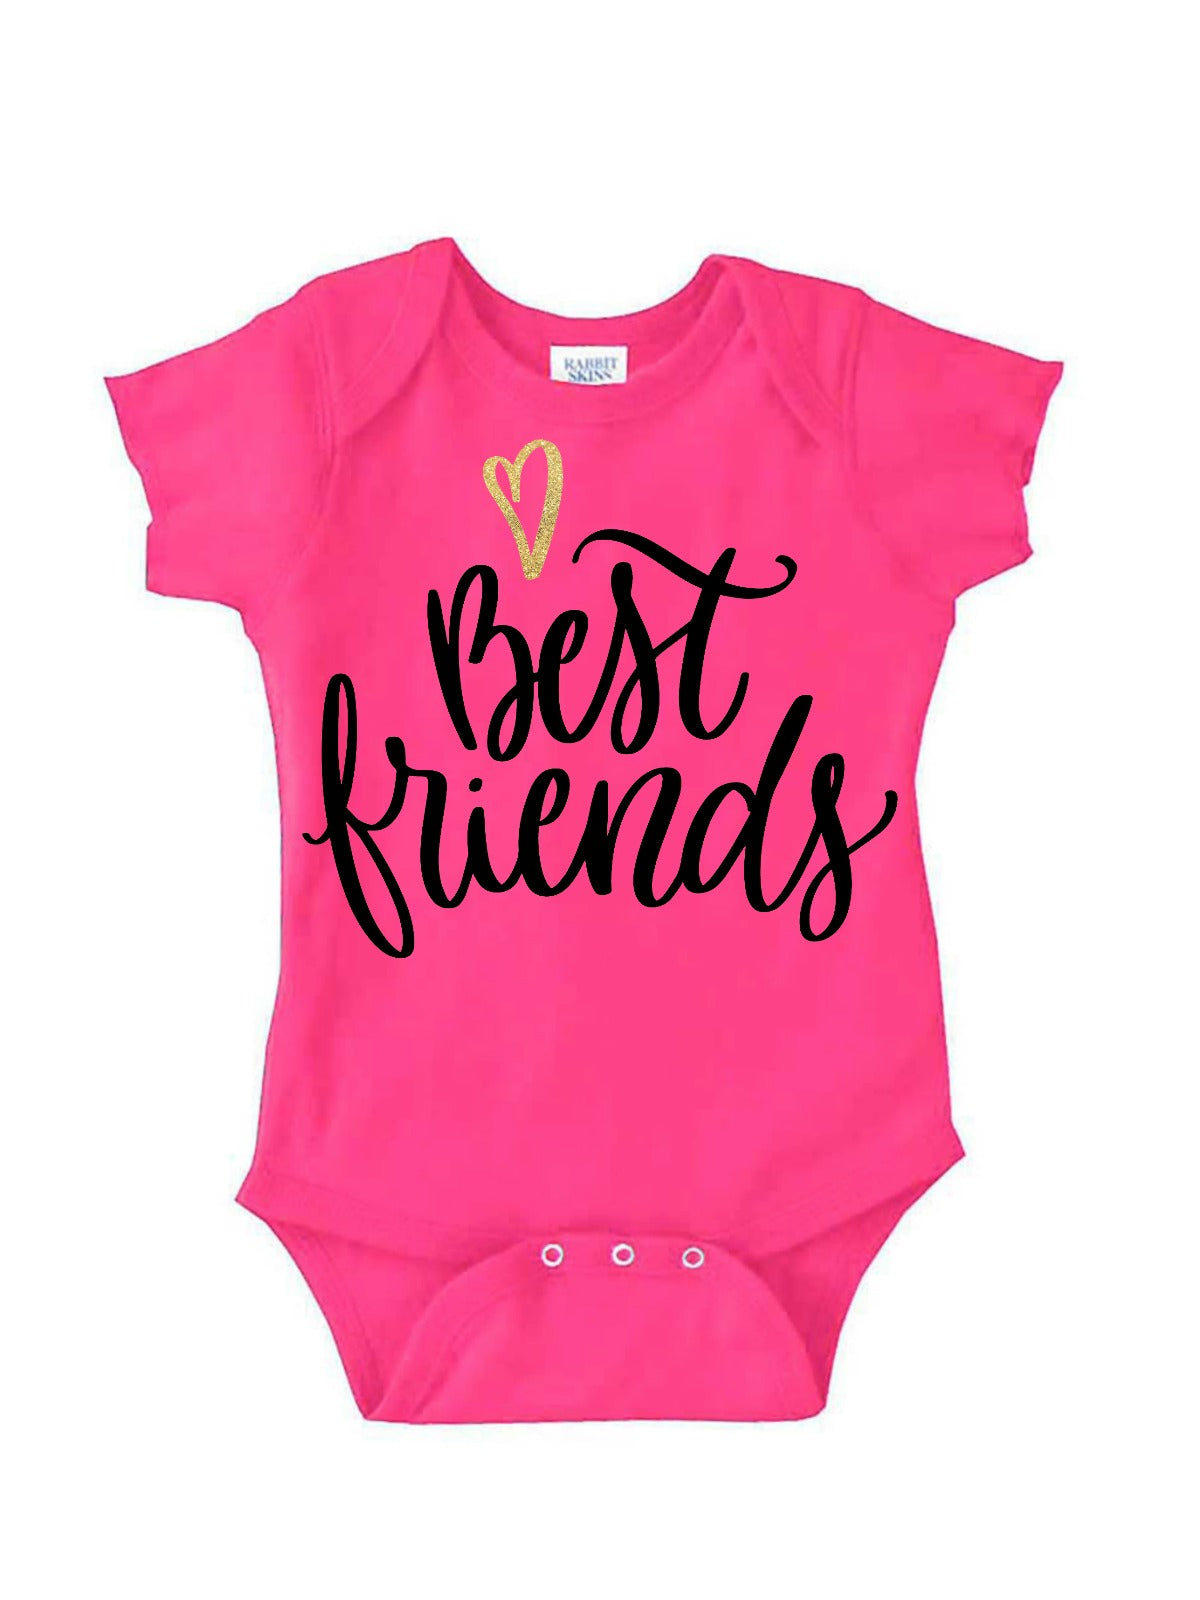 Additional Best Friends Bodysuit in Pink